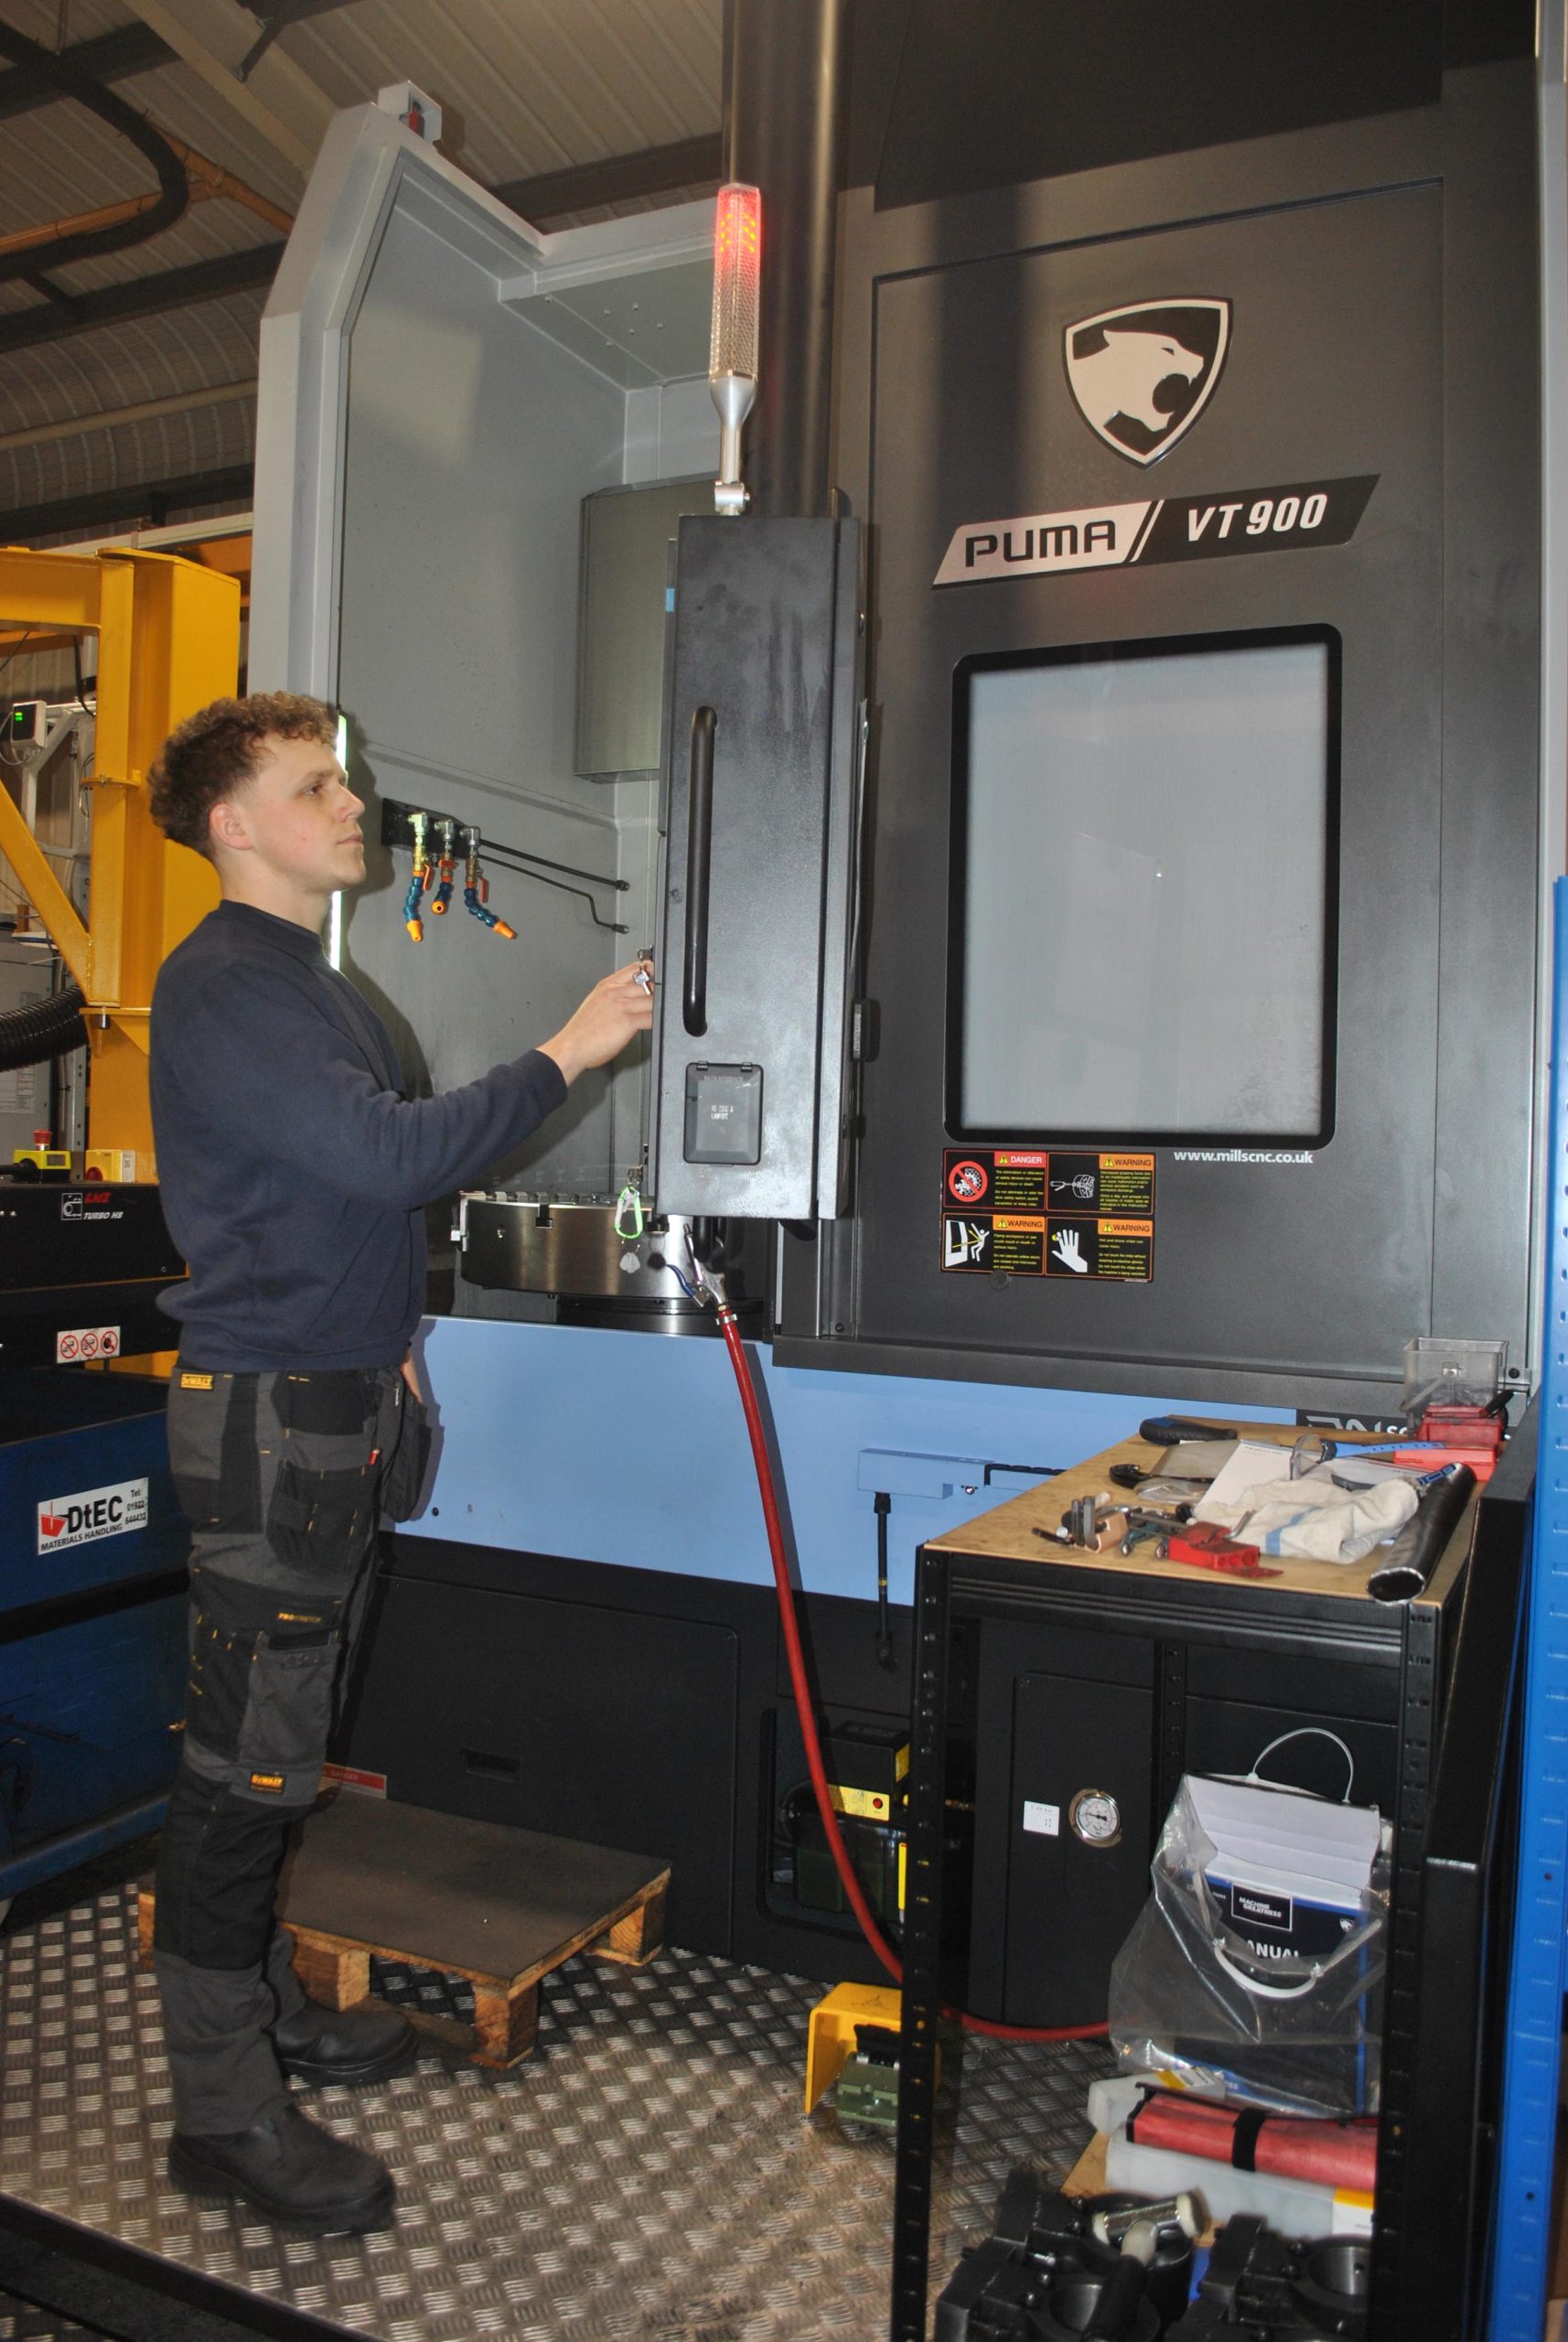 Operator at the controls of a VT900 CNC machine